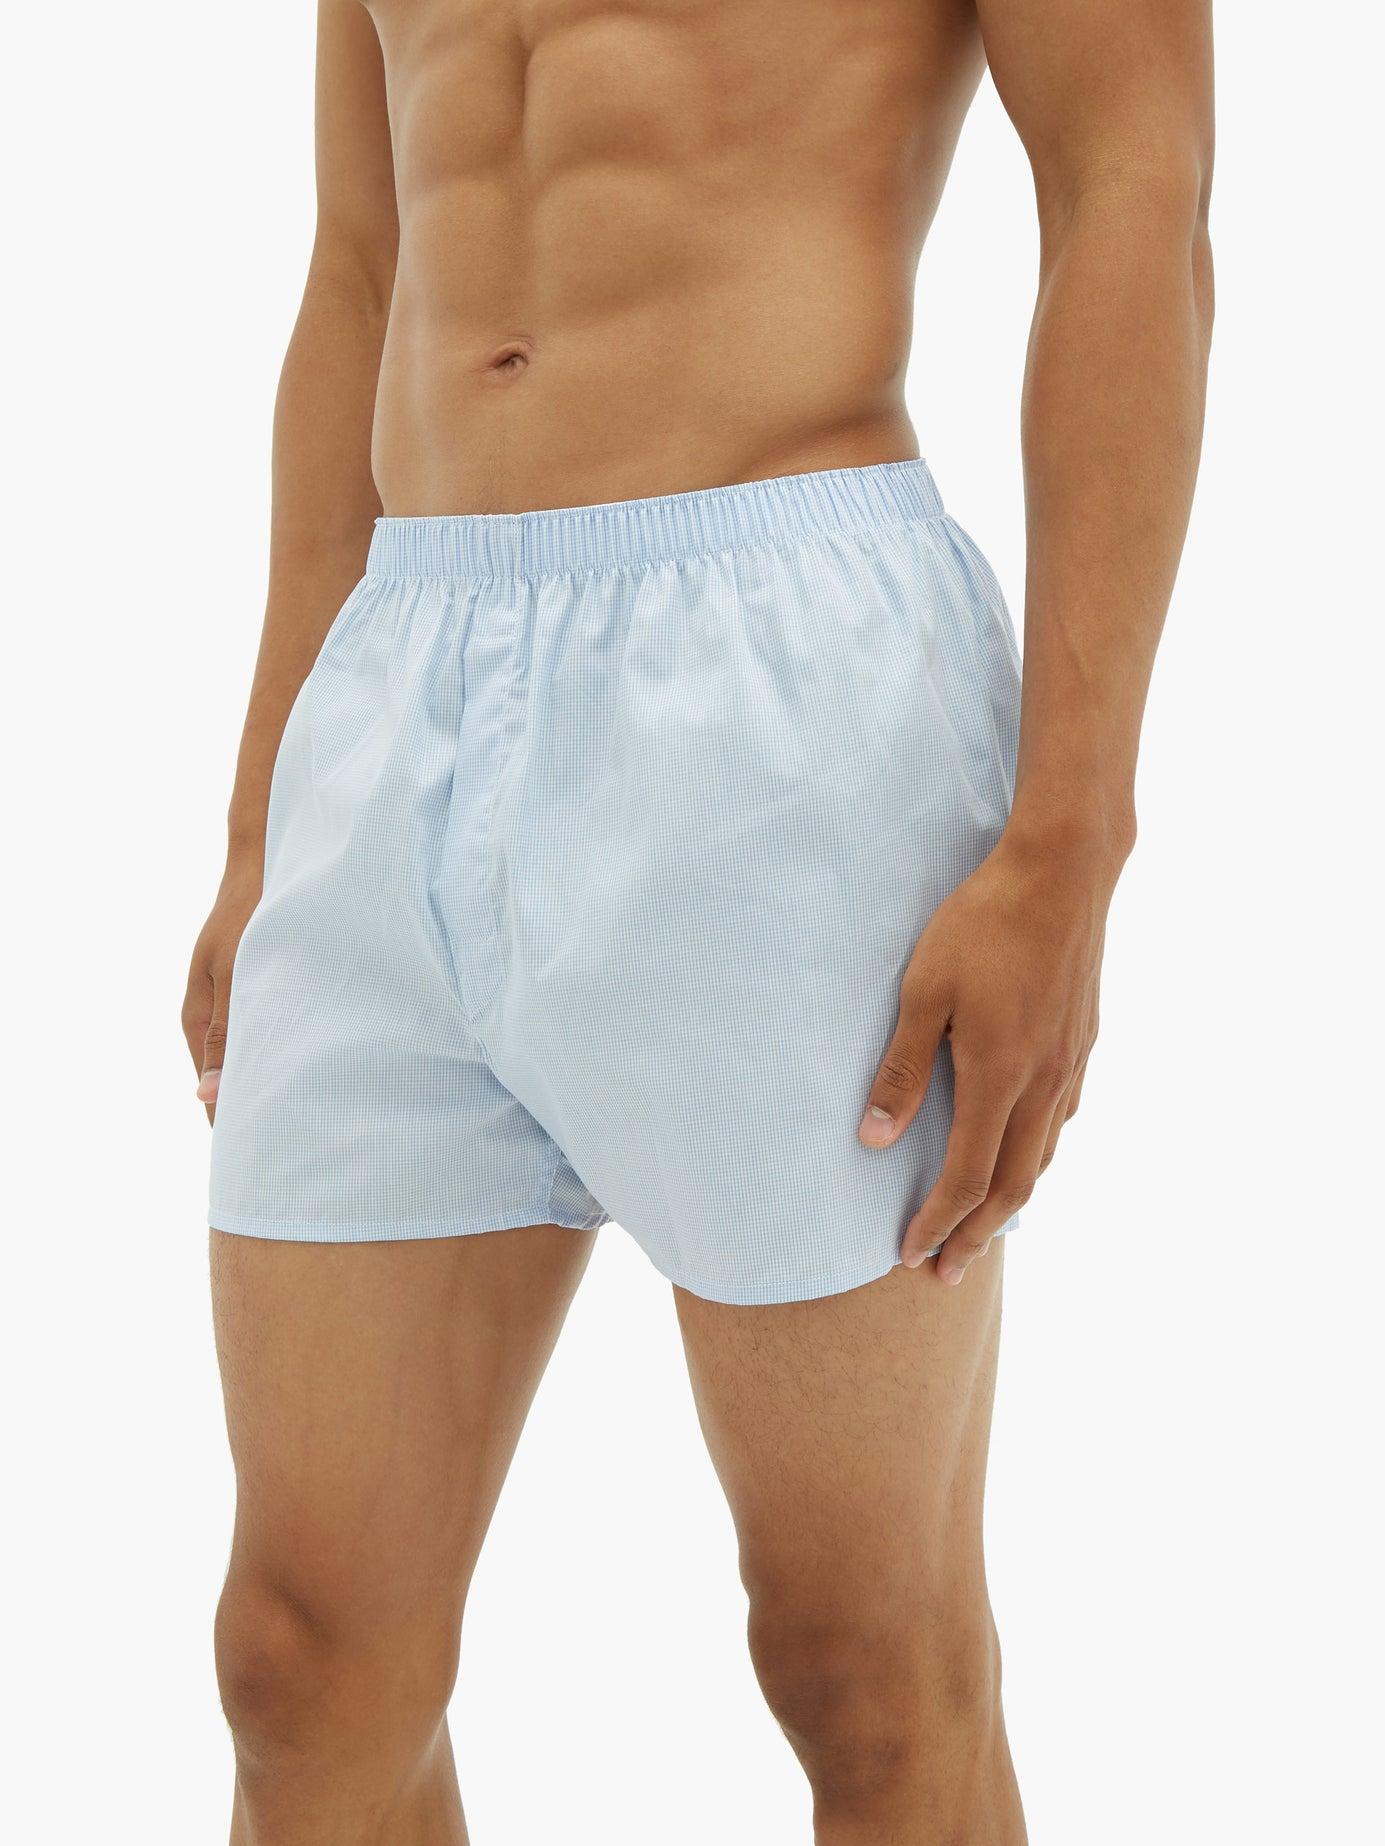 Sunspel Graph Check Cotton Poplin Boxer Shorts in Blue for Men - Lyst